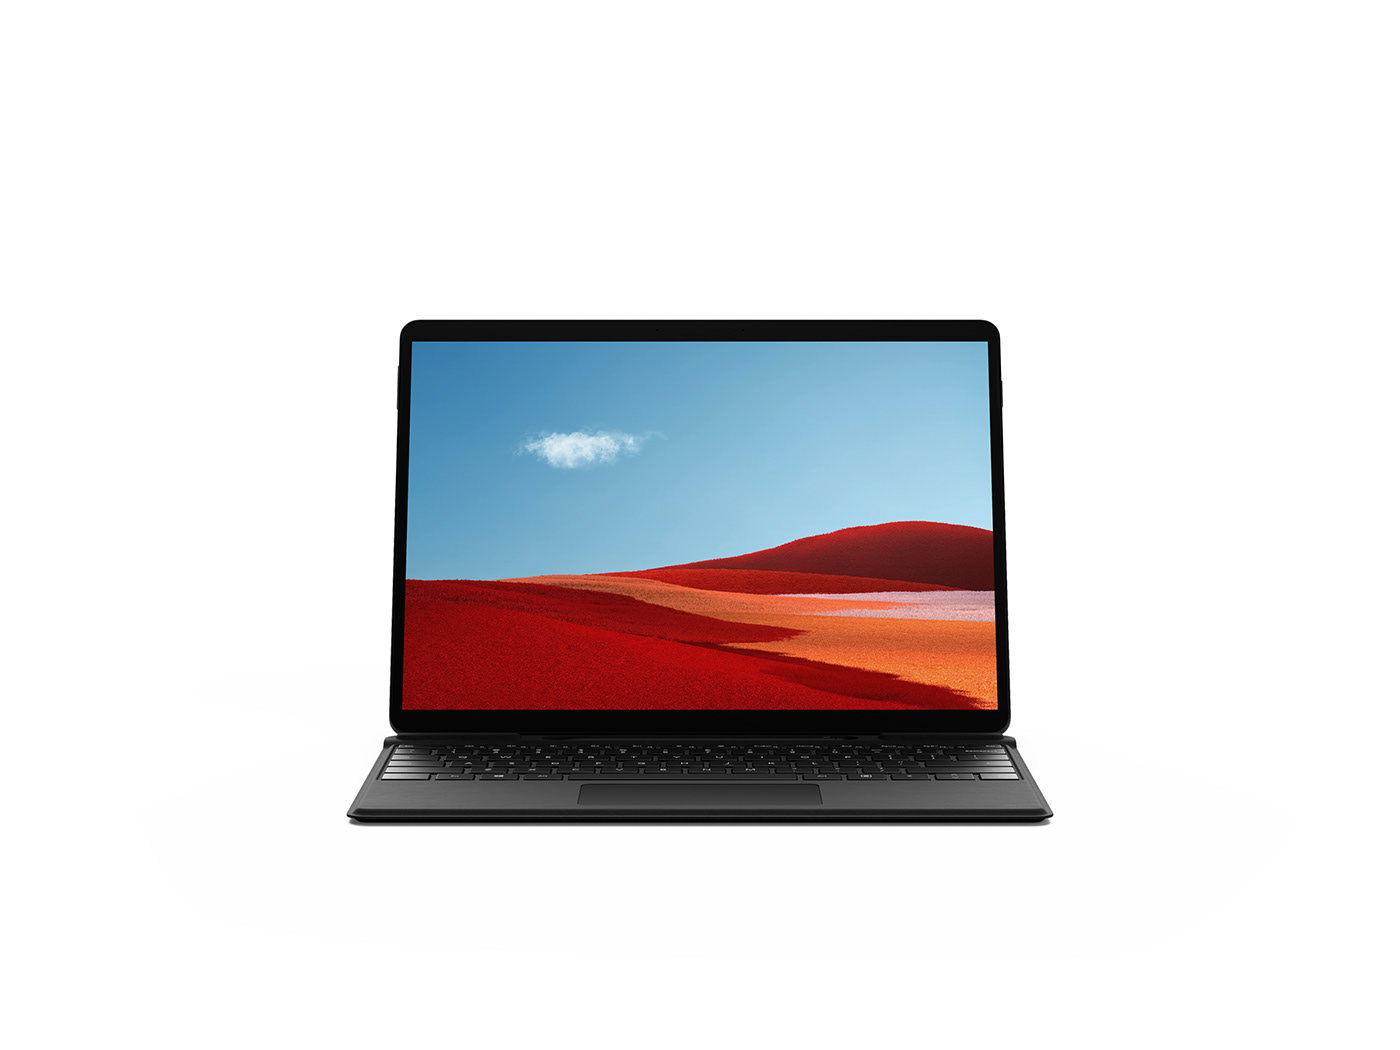 Computer free freebie Laptop Microsoft Mockup psd showcase surface tablet